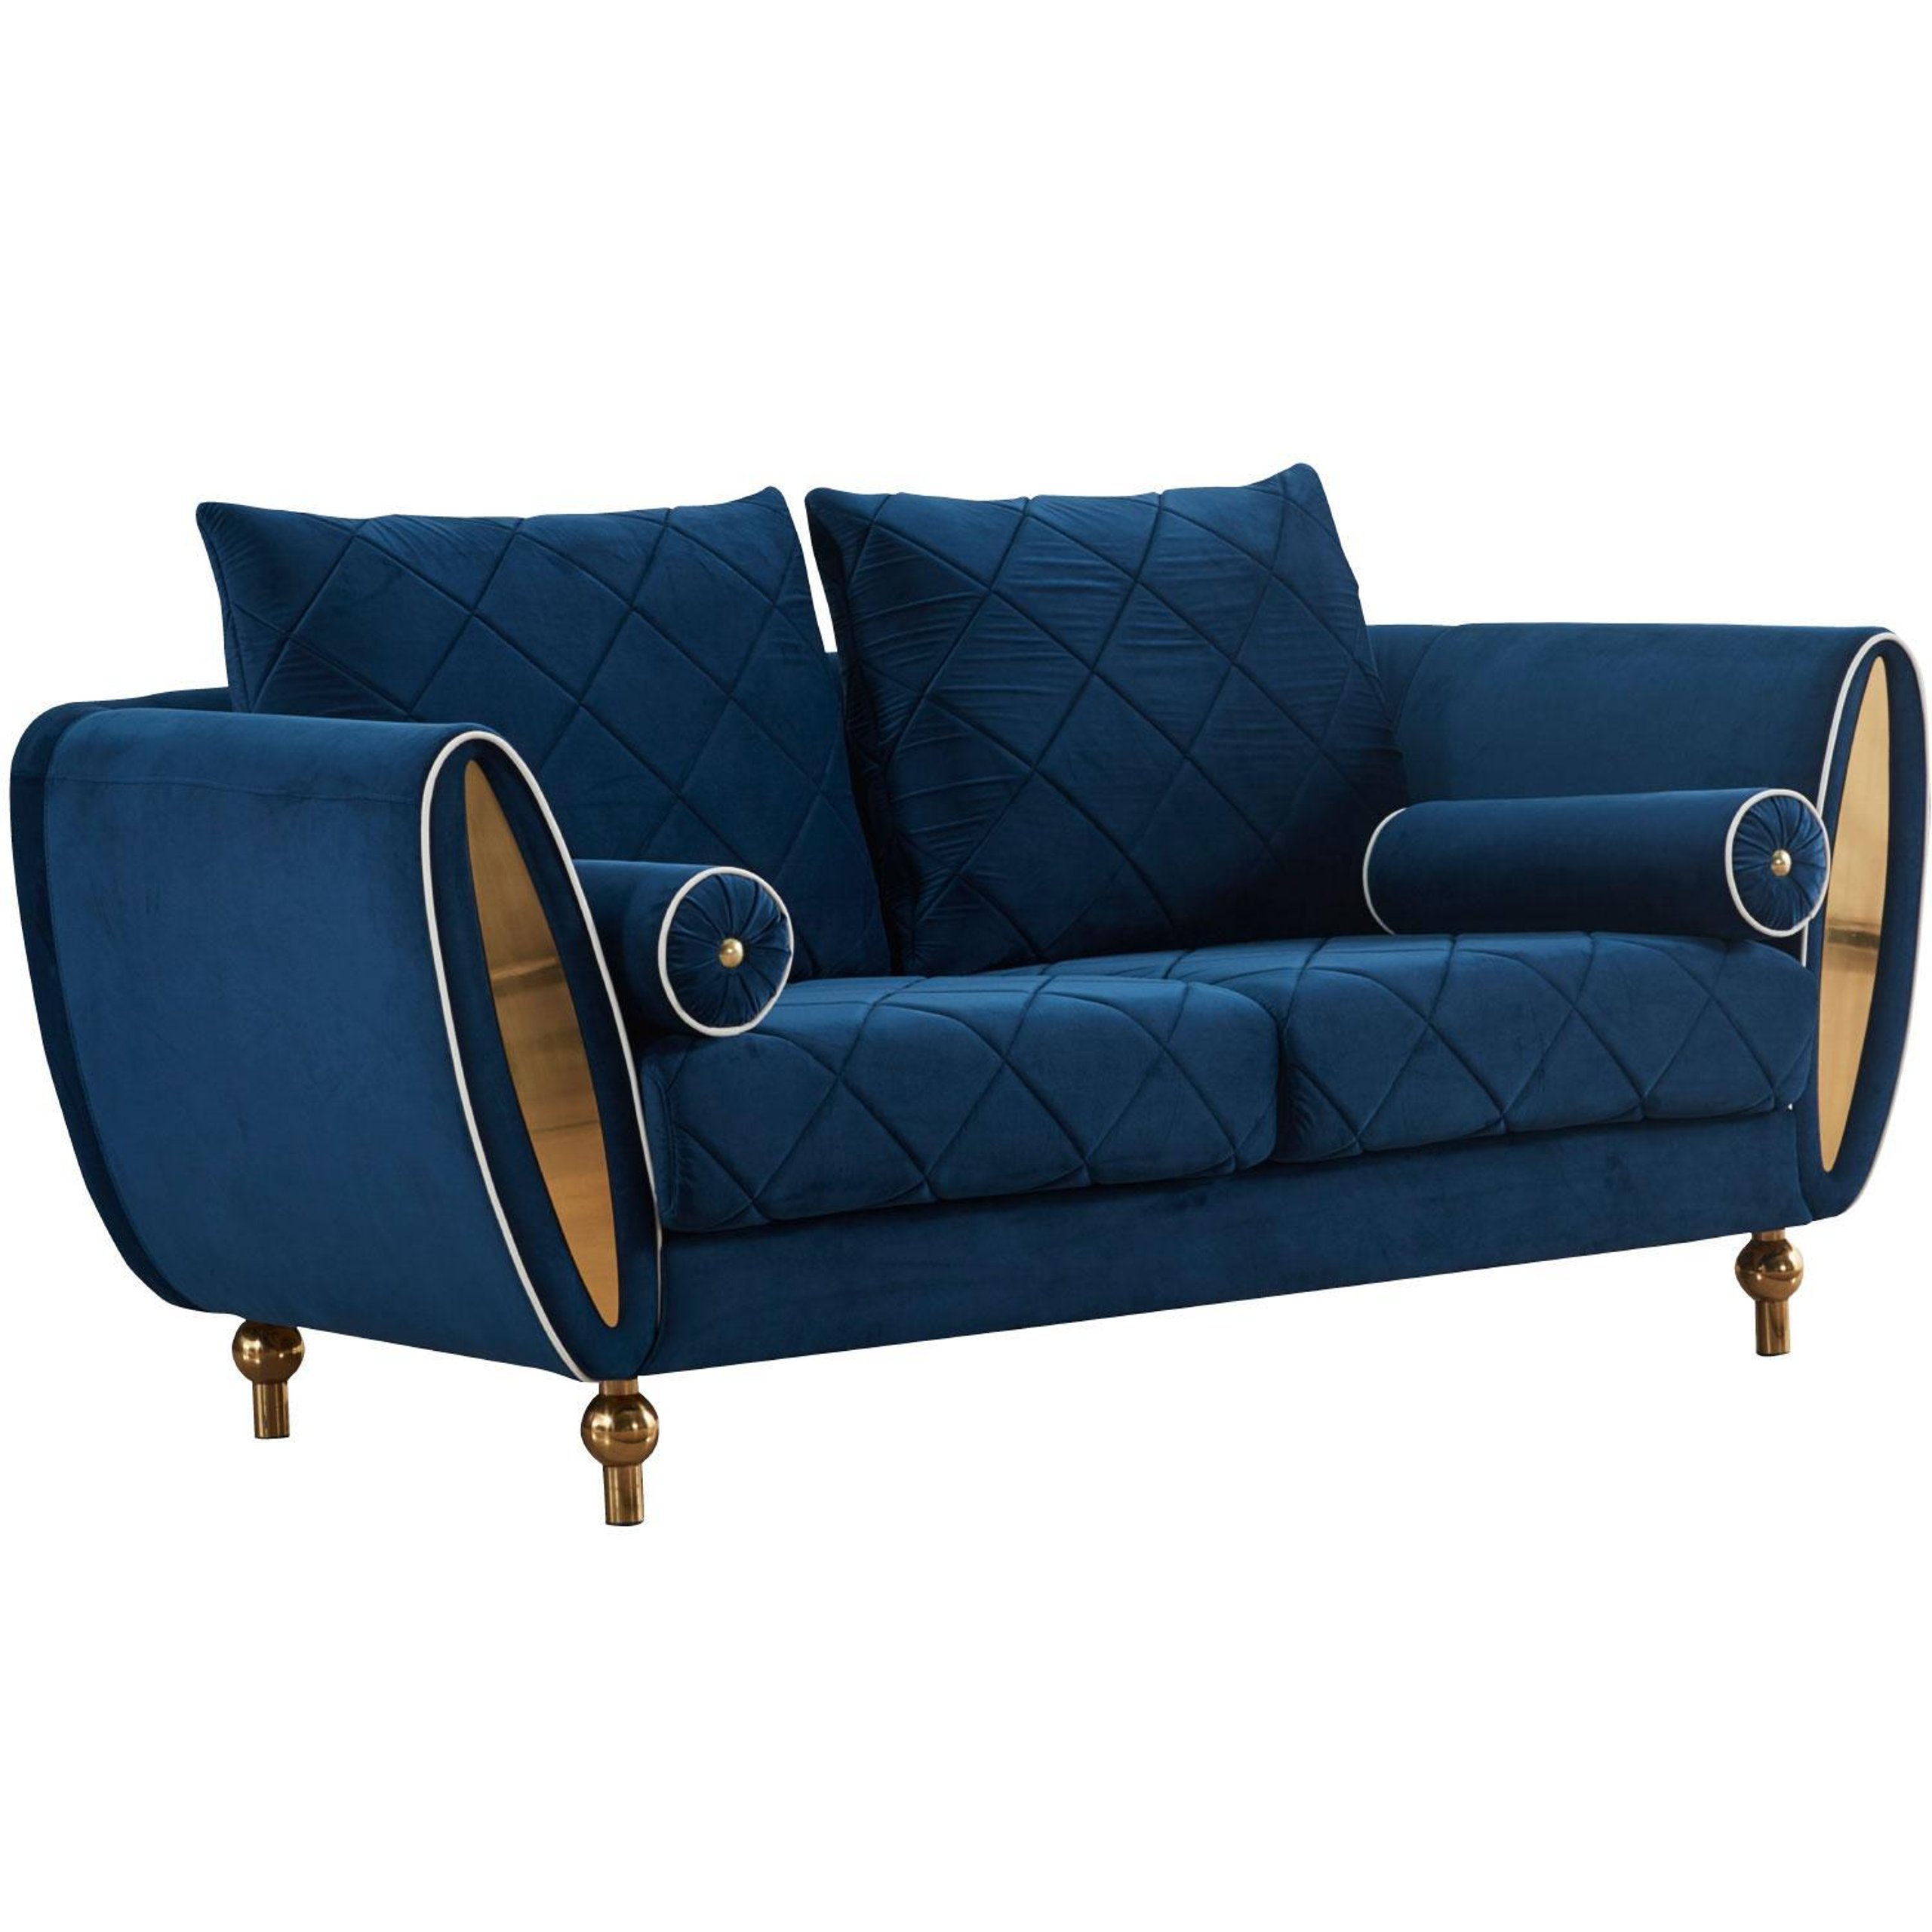 classic luxury furniture italy